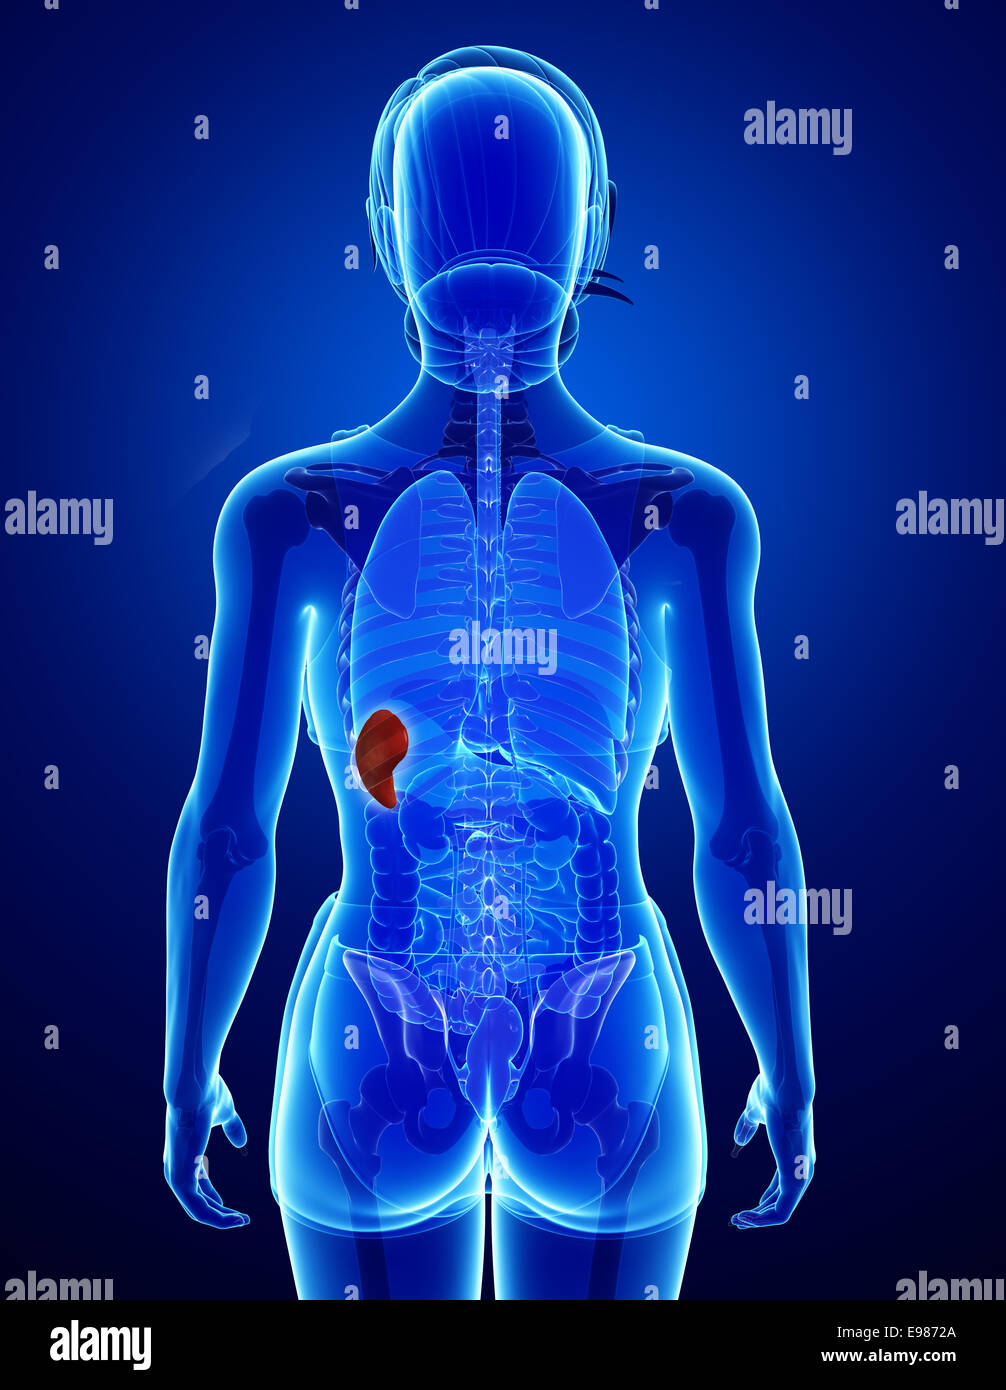 Illustration of Female spleen anatomy Stock Photo - Alamy